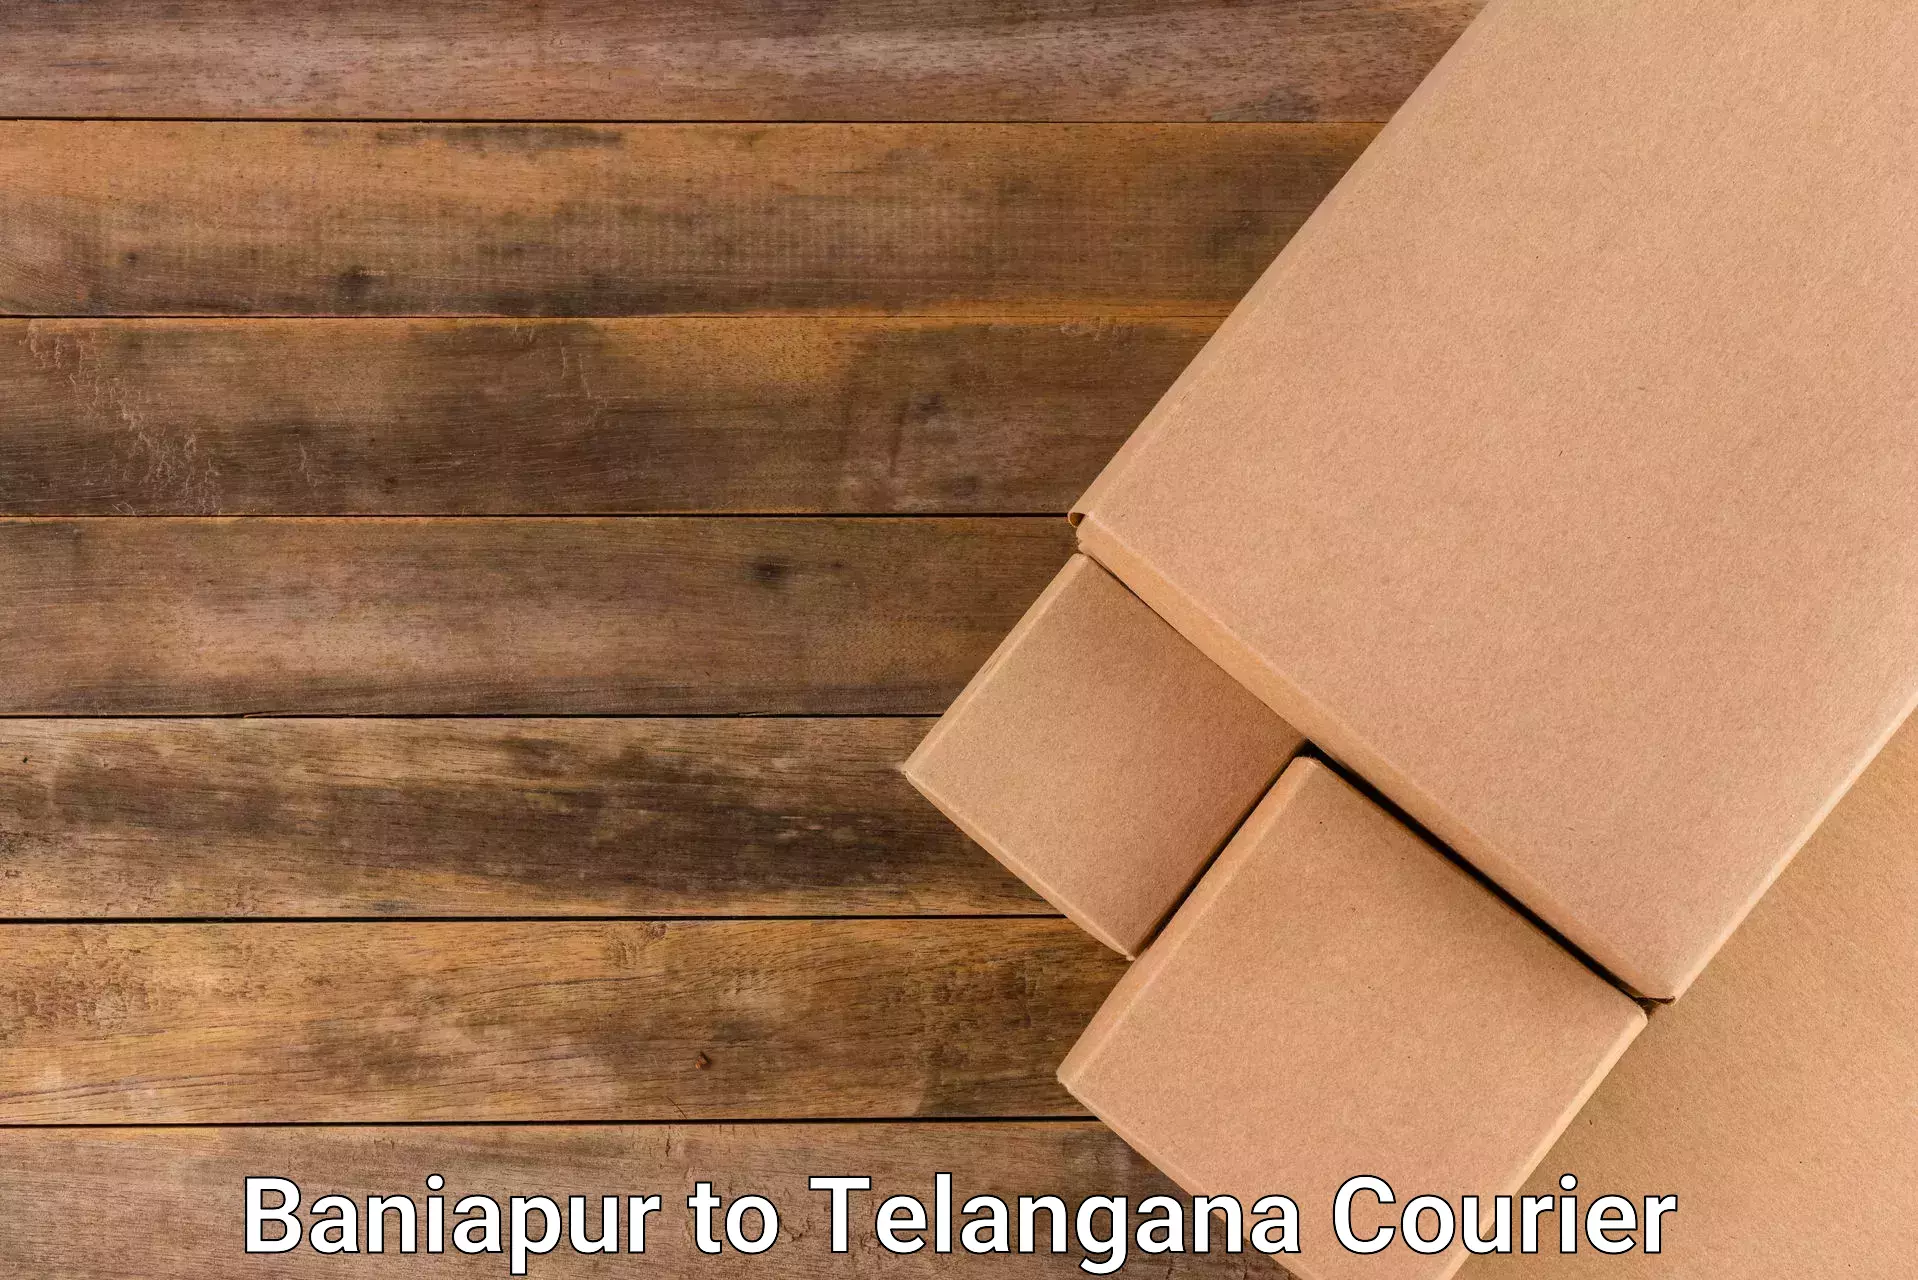 High-speed parcel service Baniapur to Tadvai